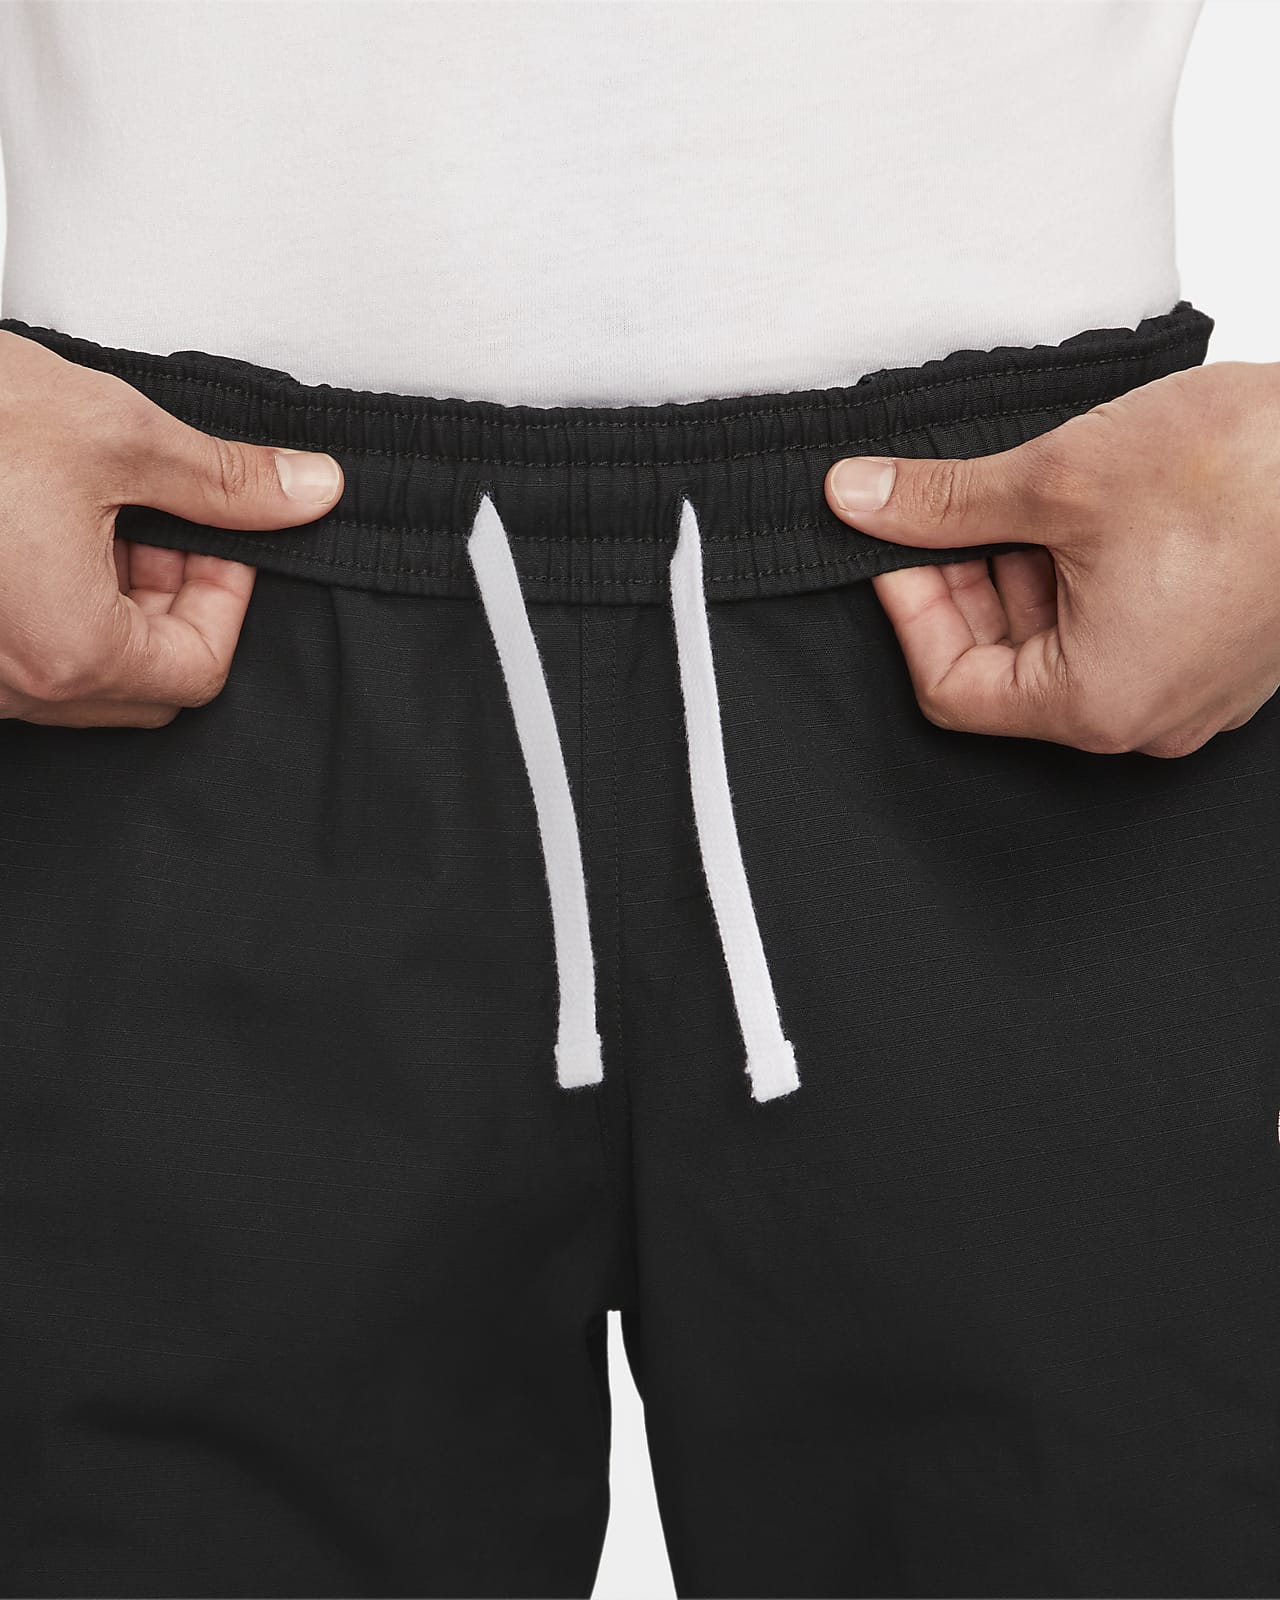 Mens Pants  Tights Nike IN